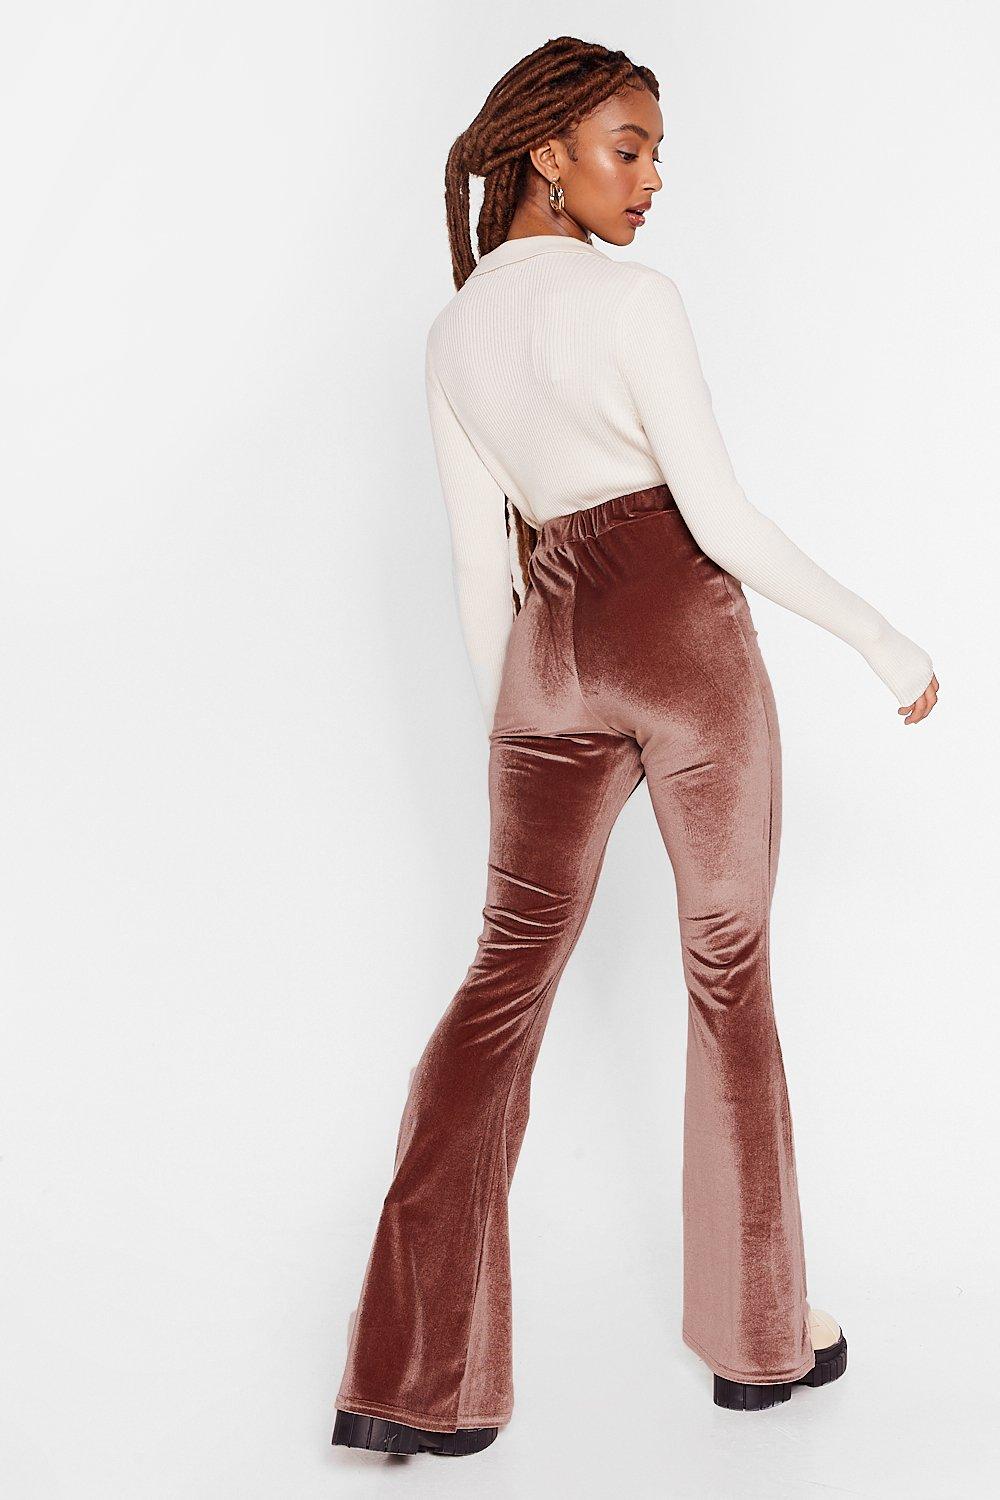 Plush Velvet Flare Pants in Caramel - The Sugarpuss Collection